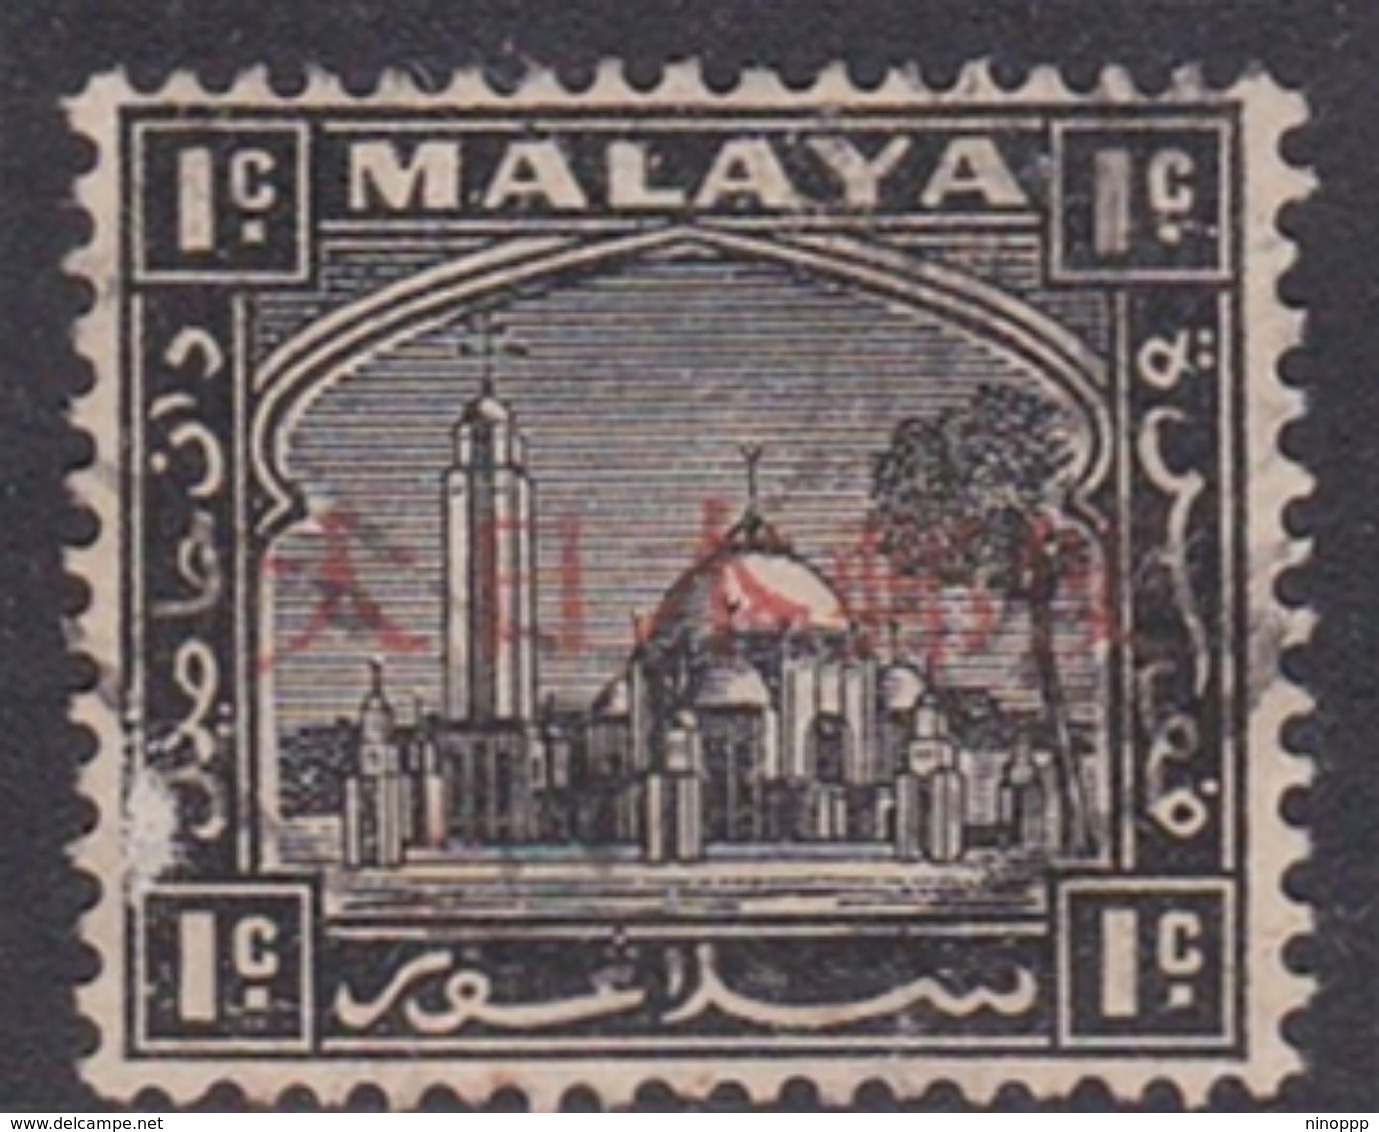 Japan Malaya Selangor Occupation 1943 1c Black Used, Fault - Oblitérés